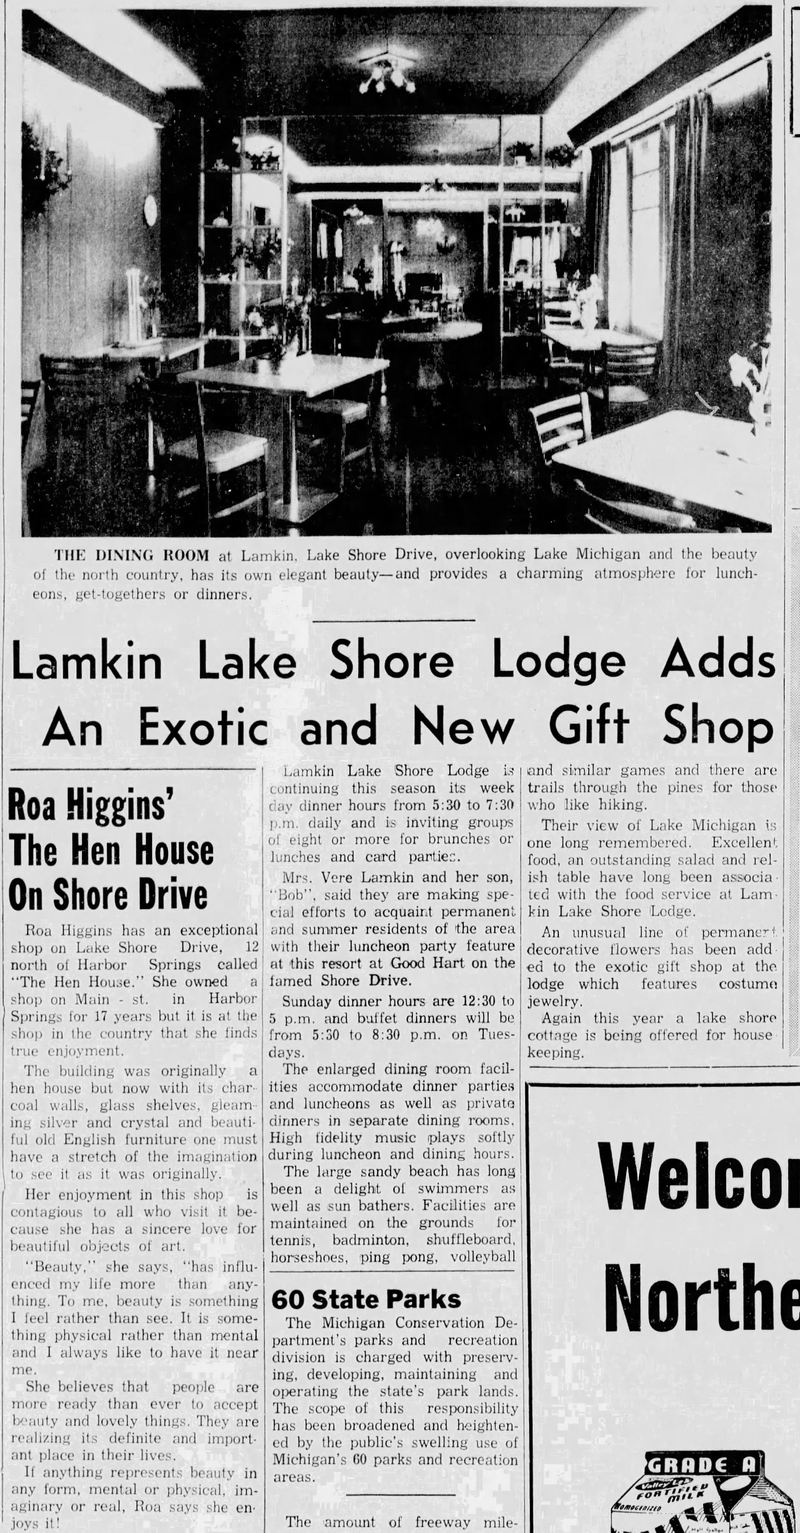 Lamkin Lake Shore Lodge - Jul 1 1963 Article